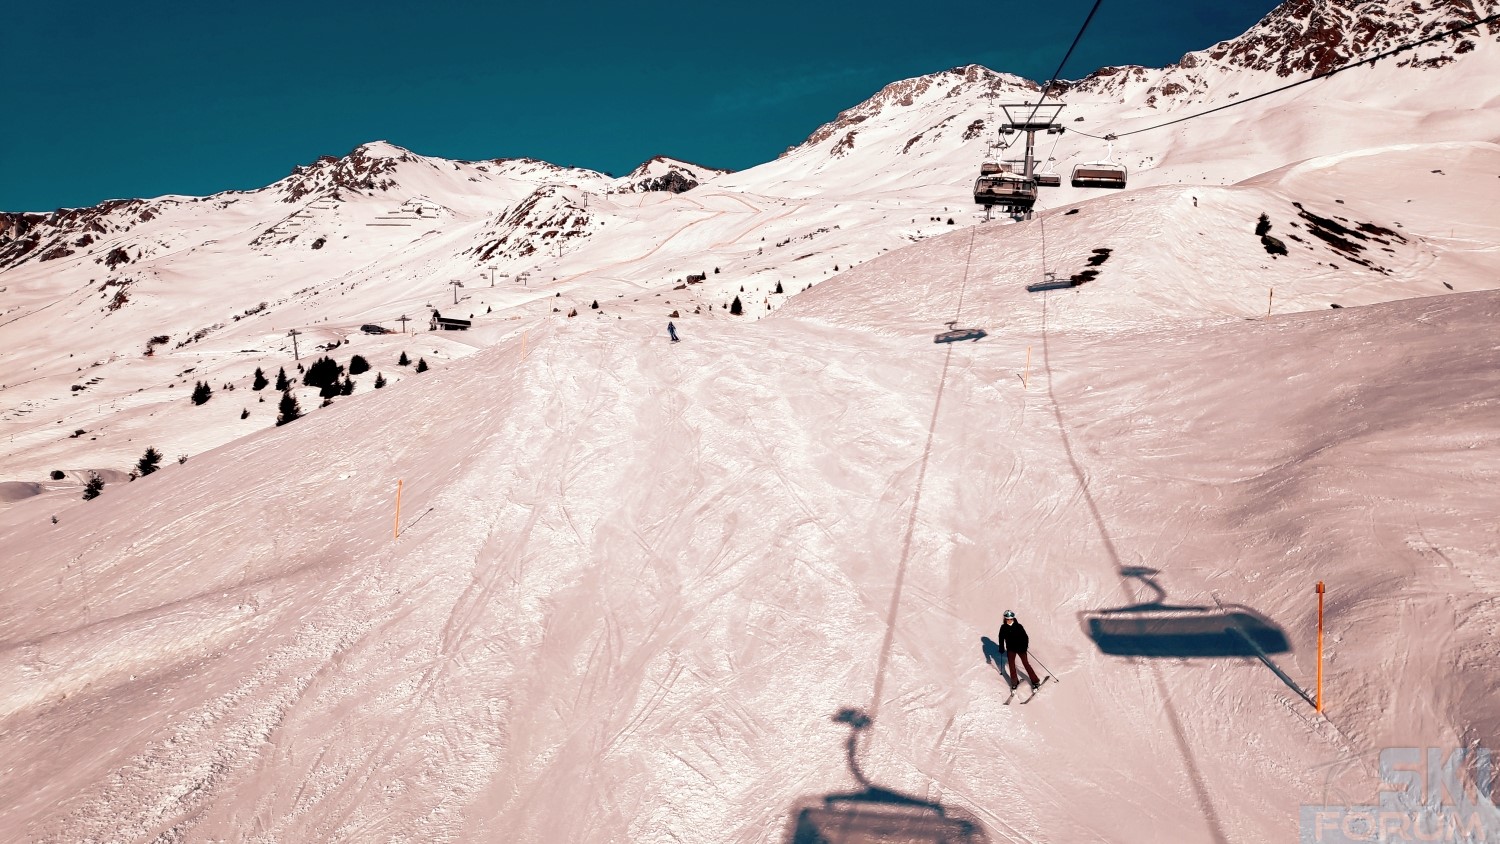 291017-sciare-ad-arosa-skiing-179.jpg